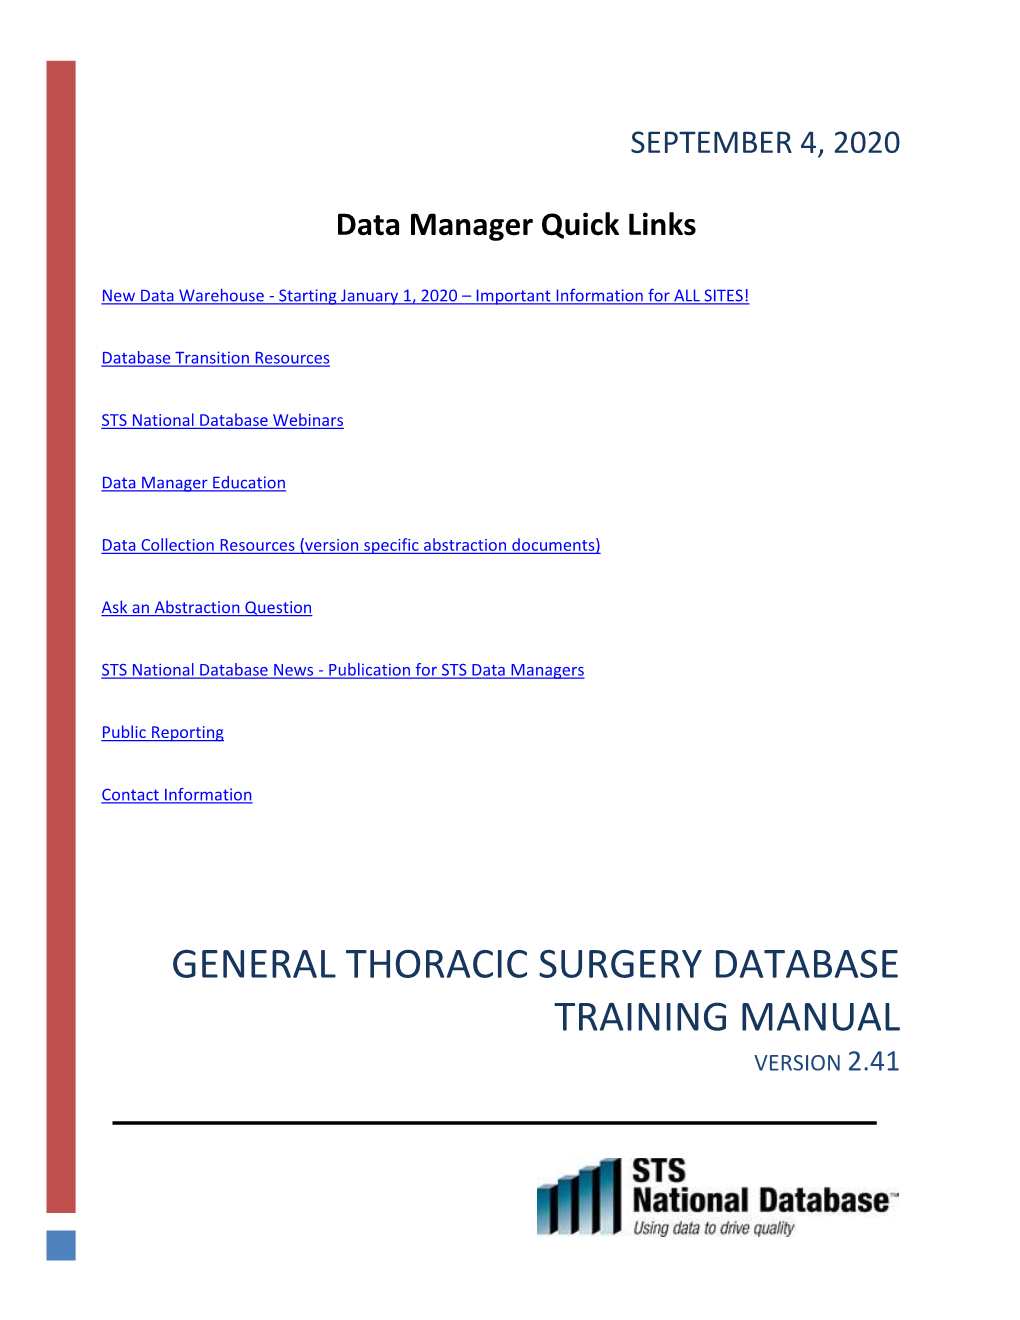 General Thoracic Surgery Database Training Manual Version 2.41